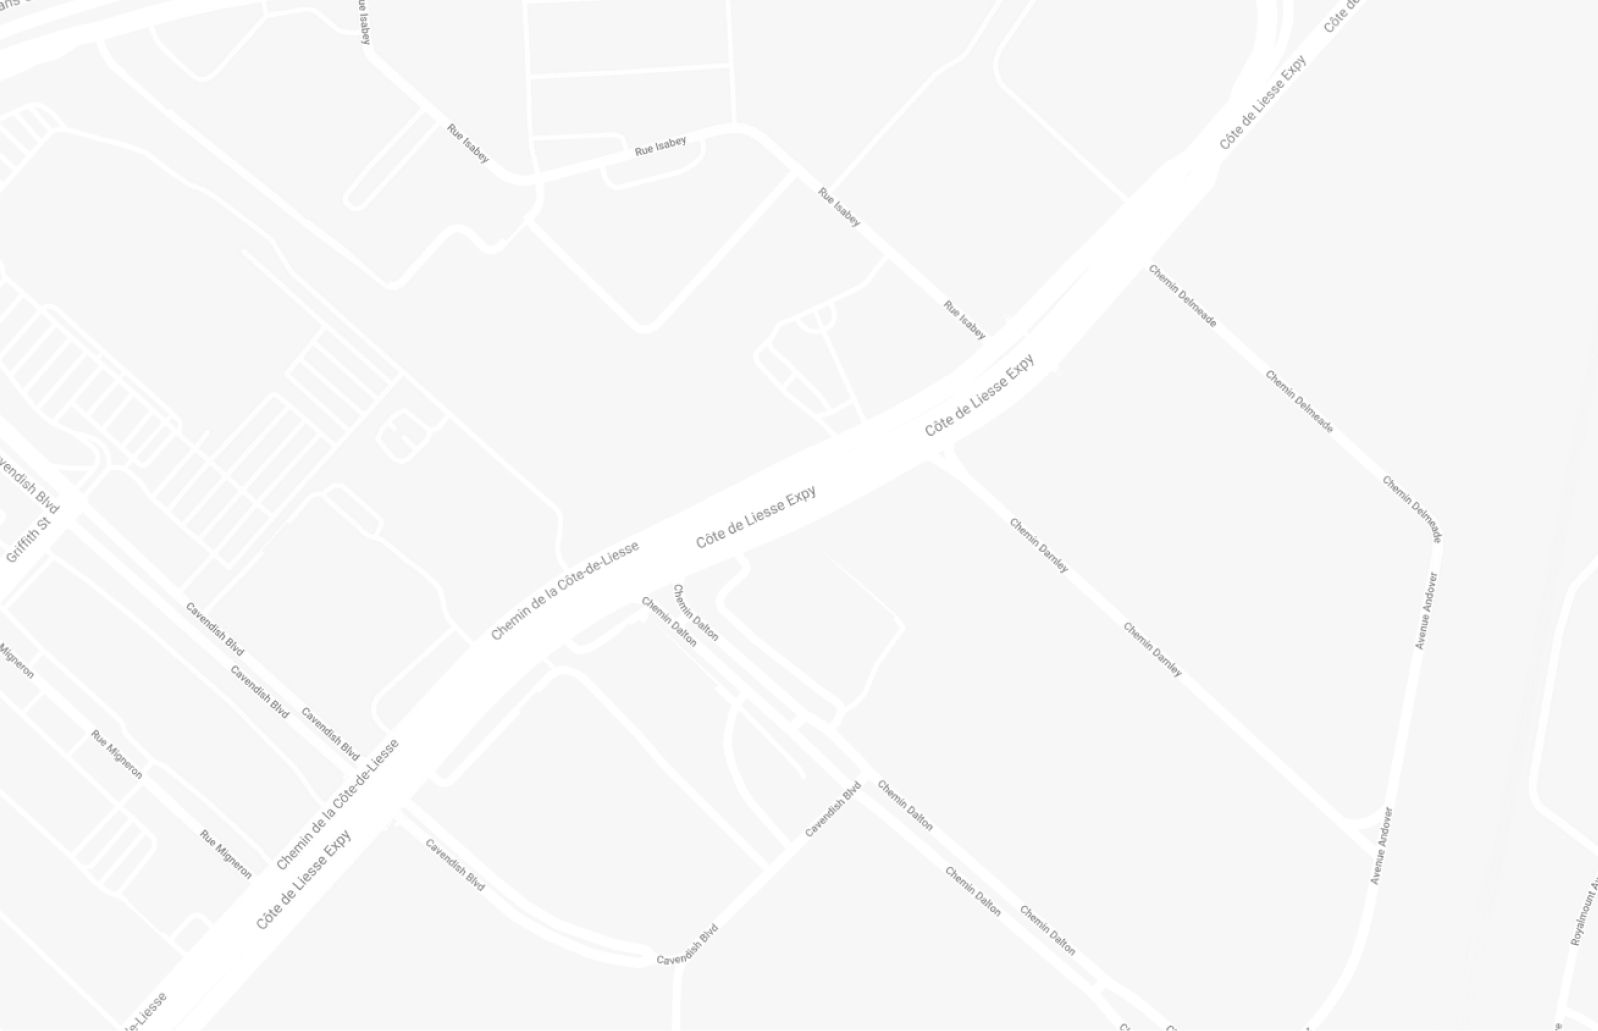 Quartexx location on google maps